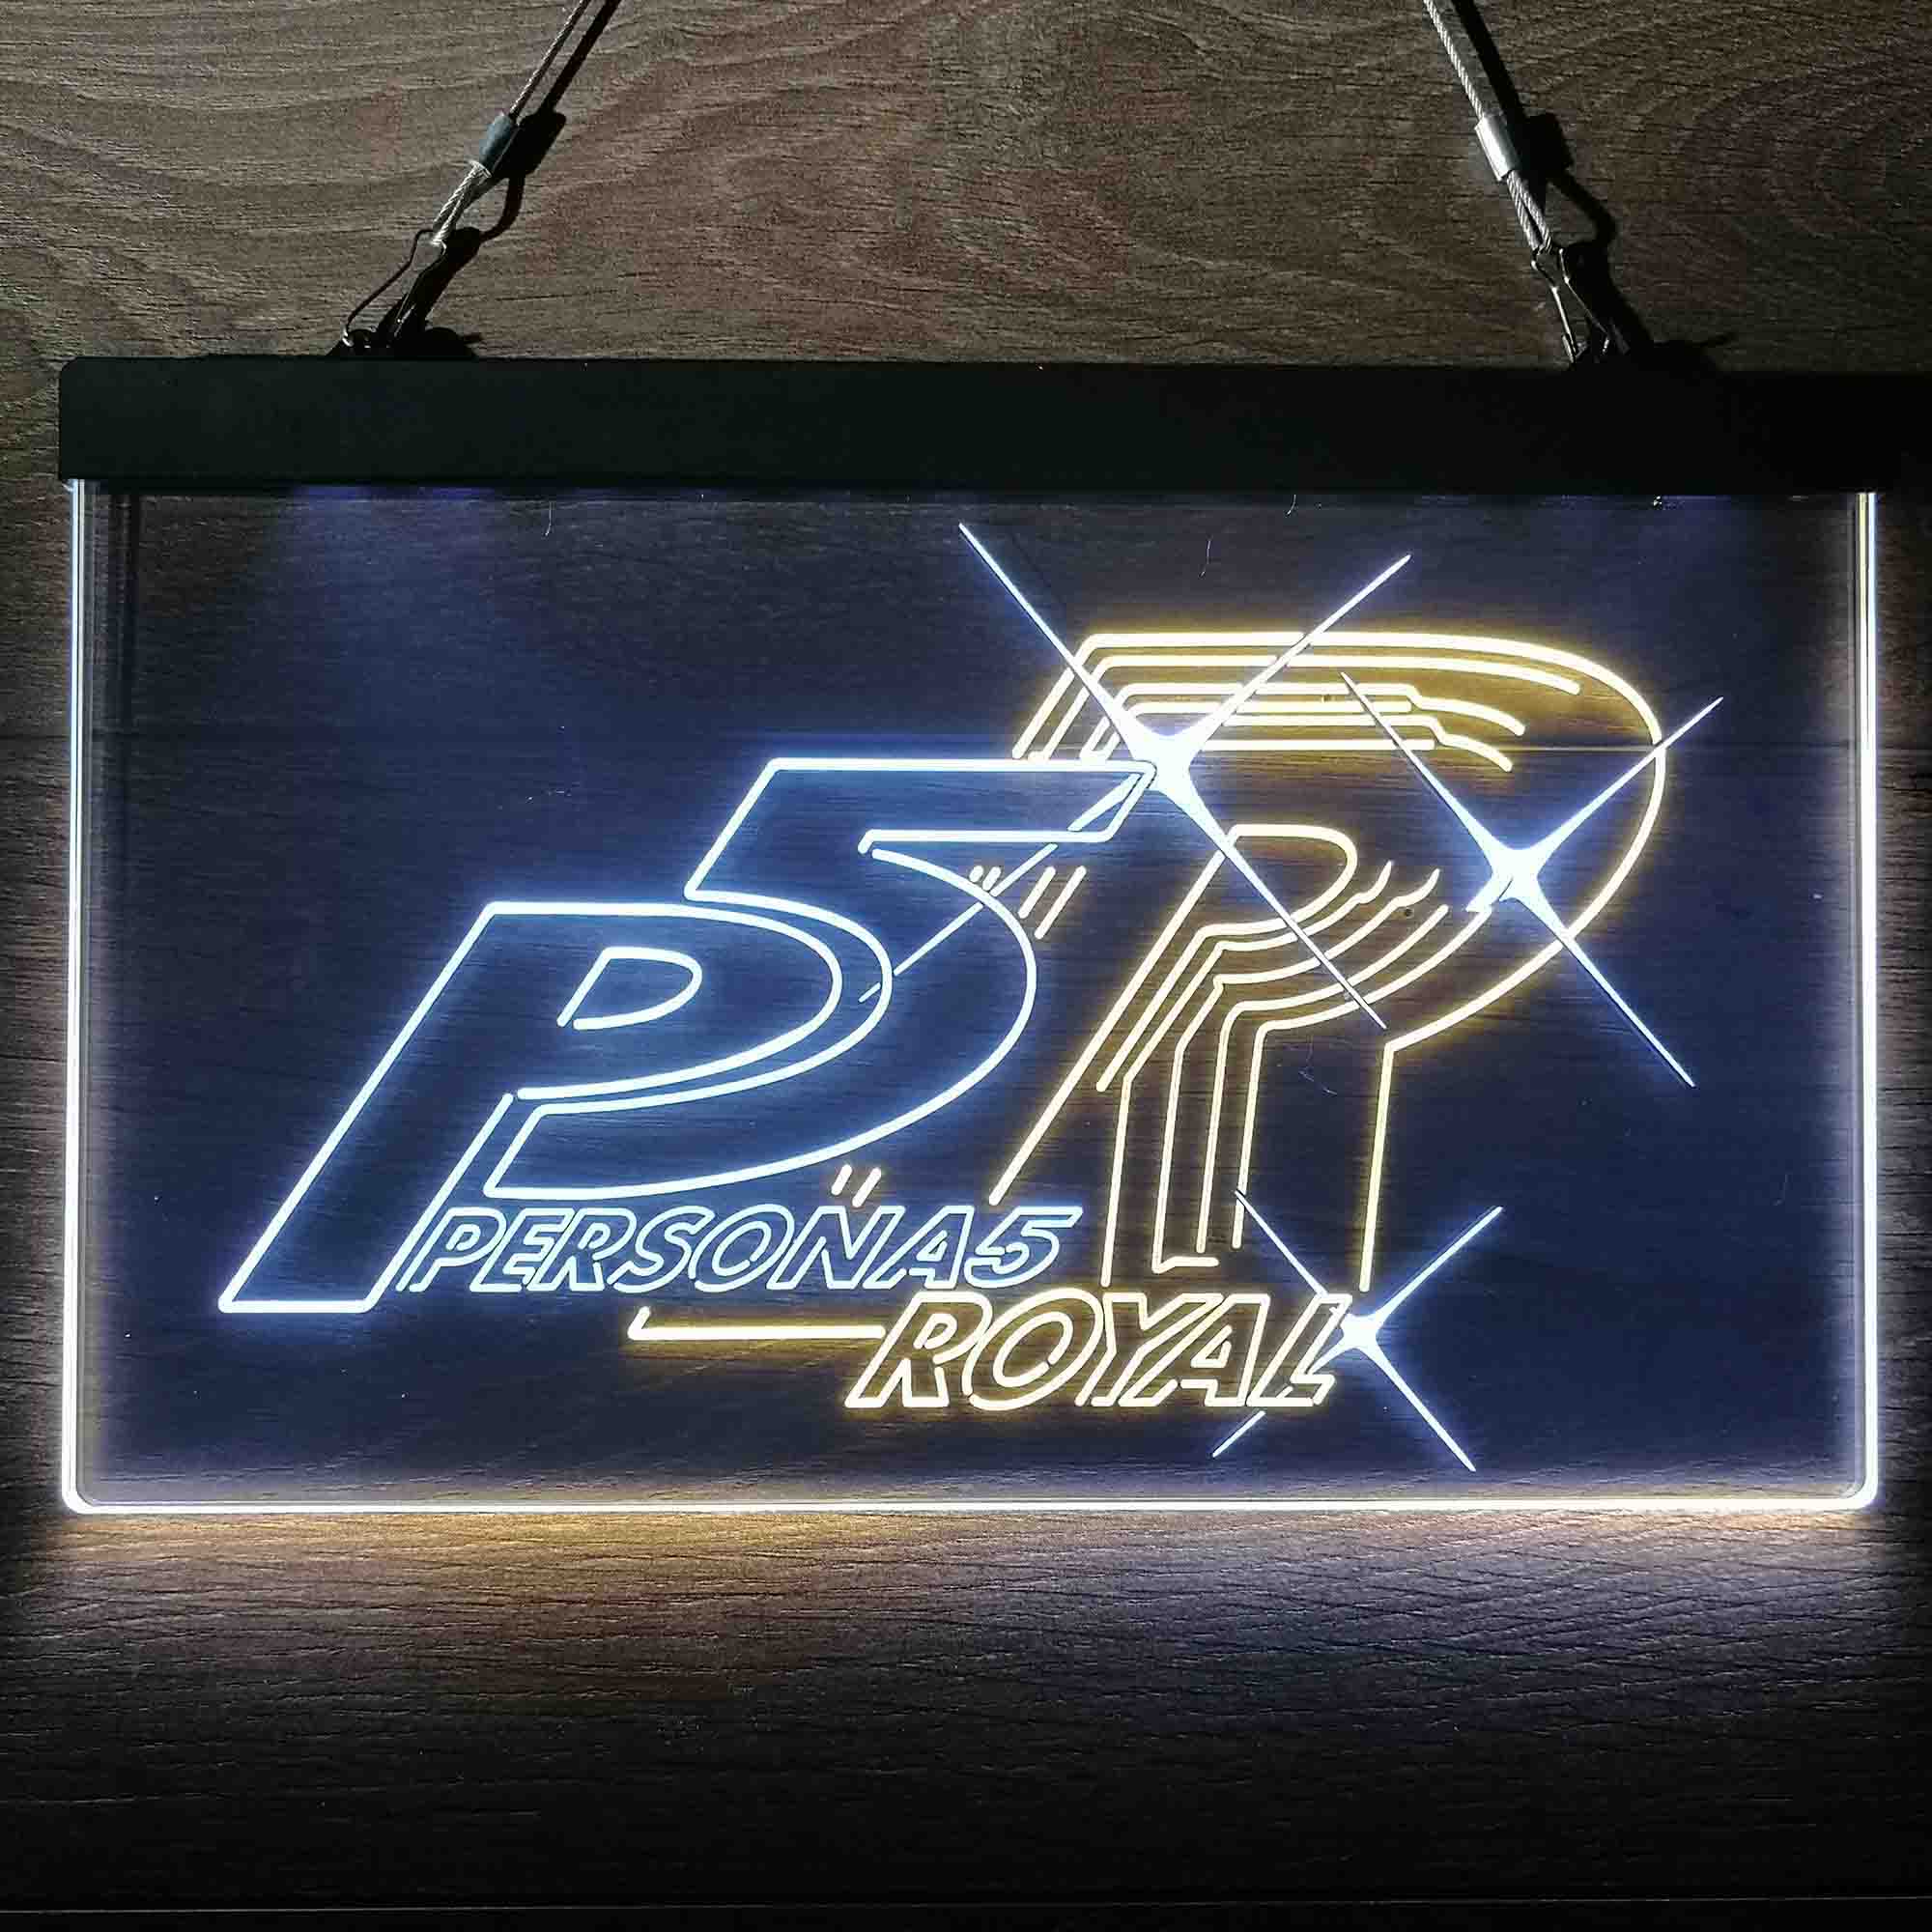 Persona 5 Royal Game Room Neon-Like LED Sign